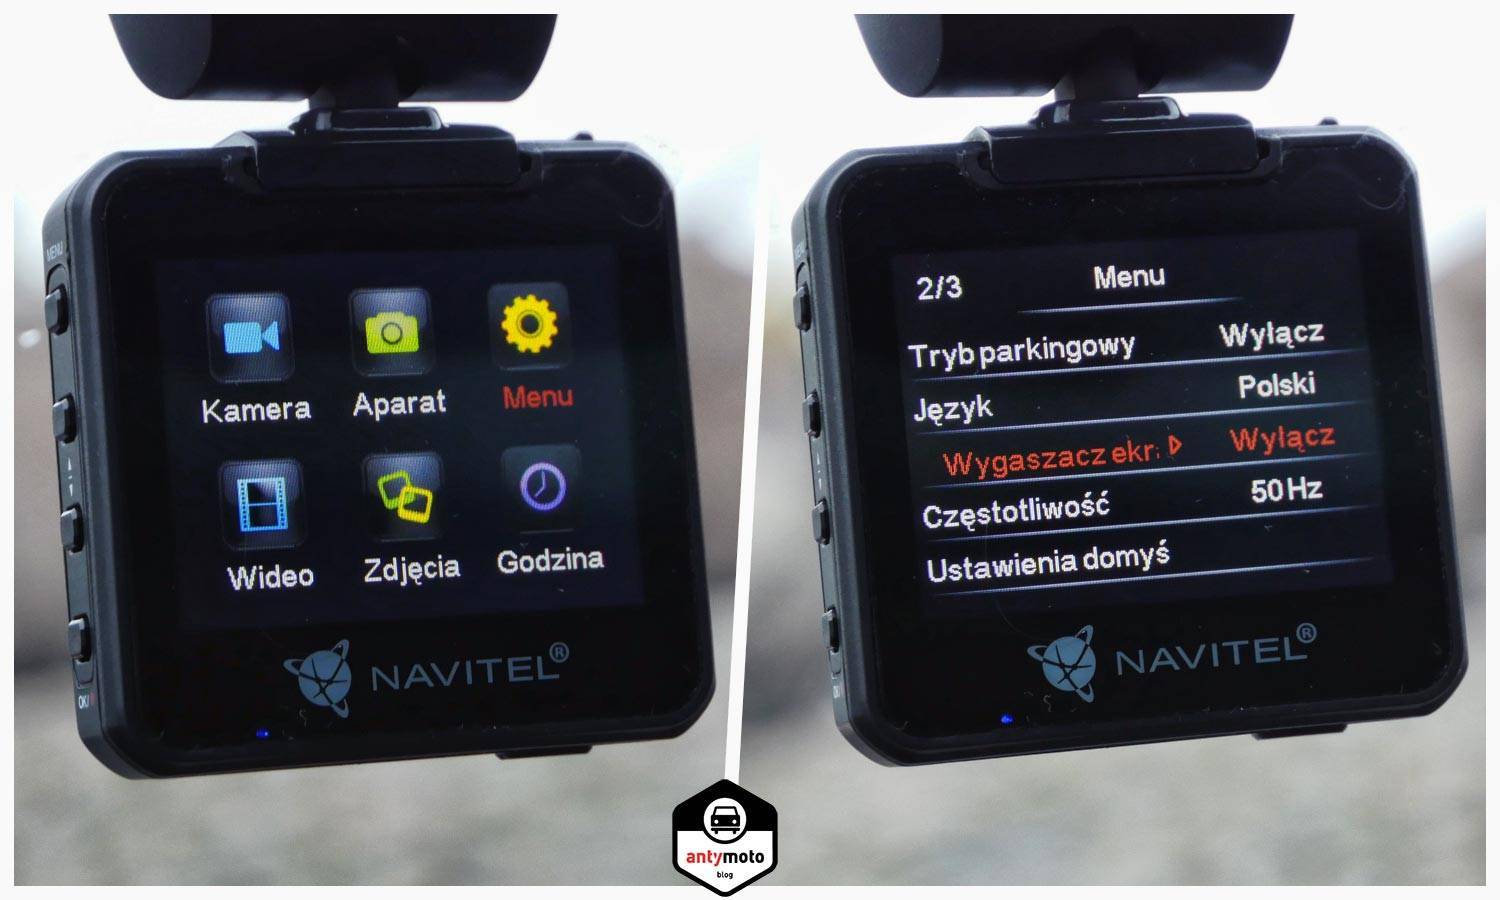 Обзор navitel re900 – видеорегистратора 2в1 с навигатором на базе android